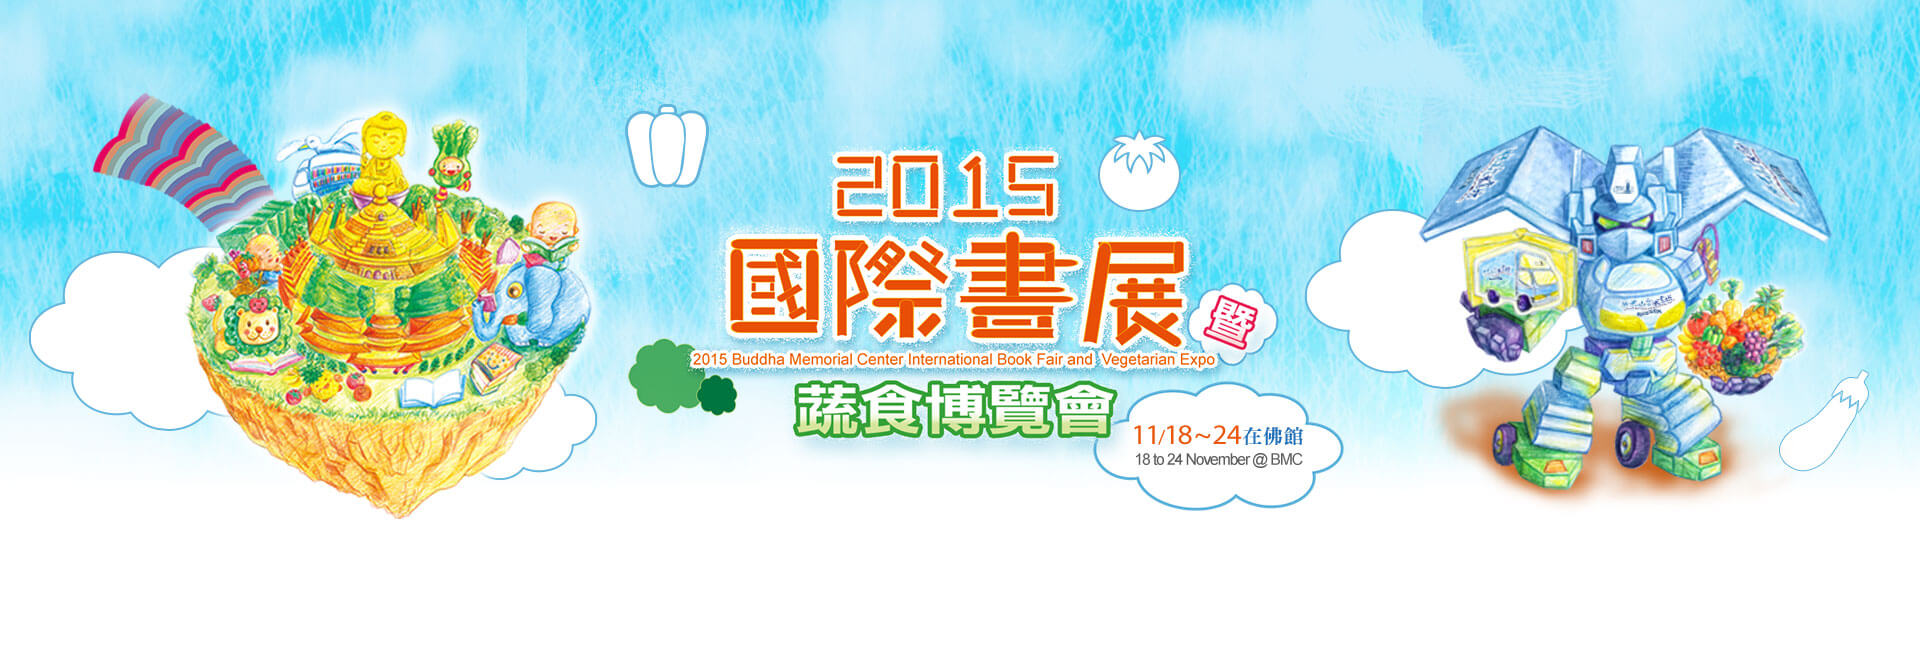 2015 Buddha Memorial Center international Book Fair and Vegetarian Expo